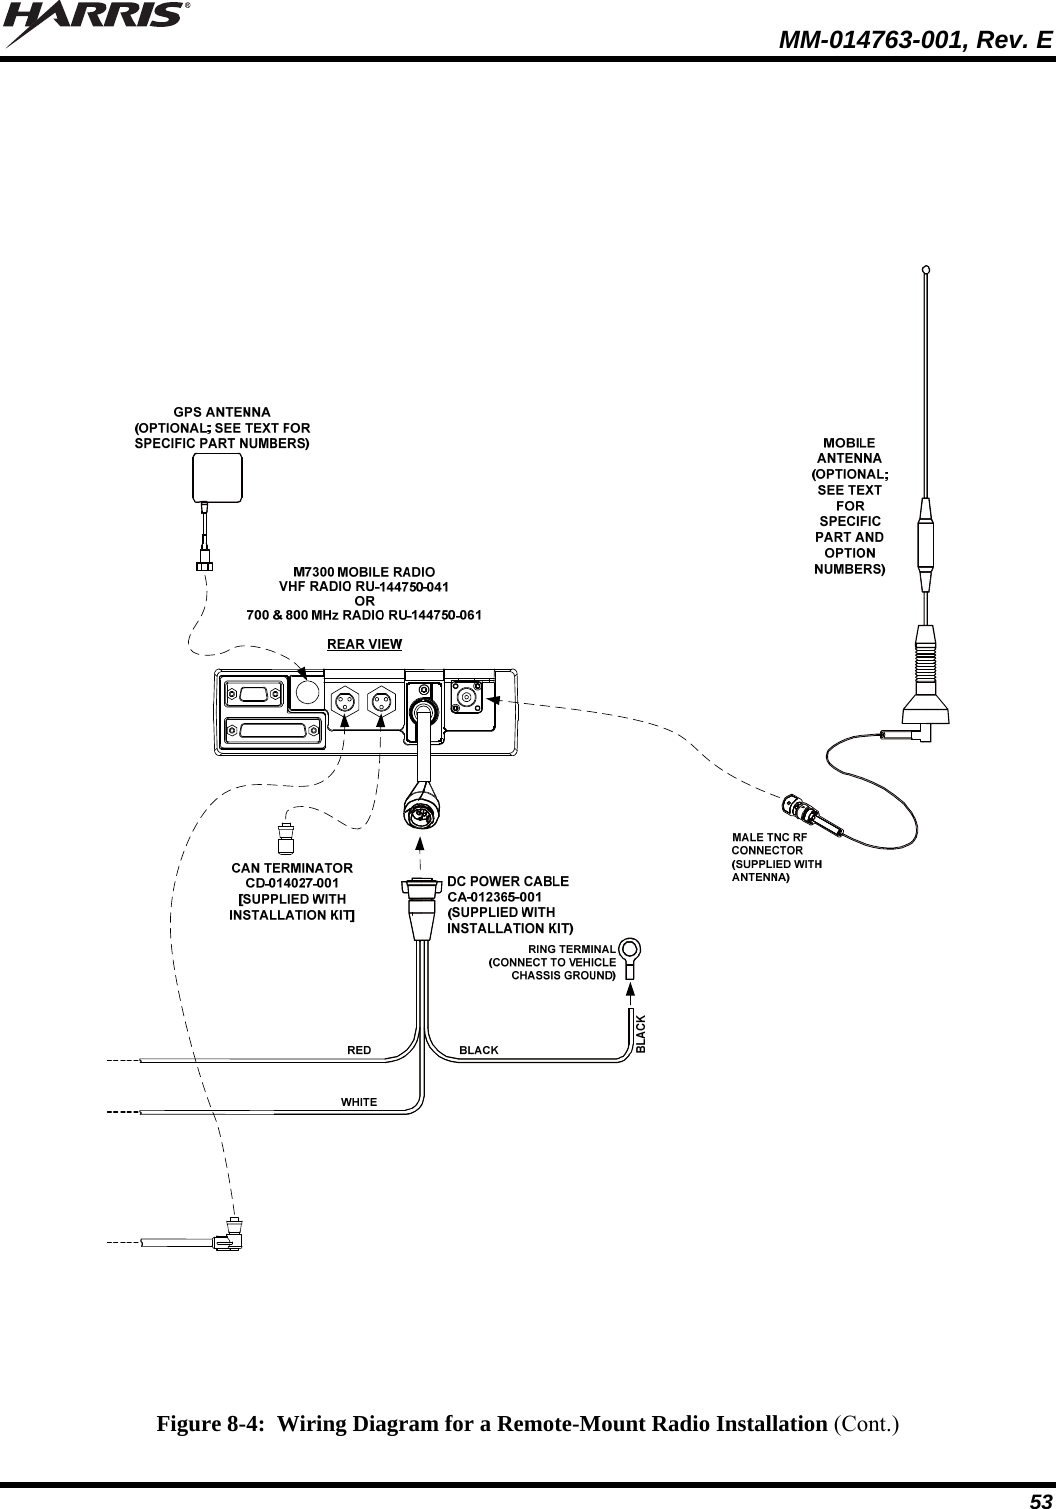   MM-014763-001, Rev. E 53  Figure 8-4:  Wiring Diagram for a Remote-Mount Radio Installation (Cont.)  